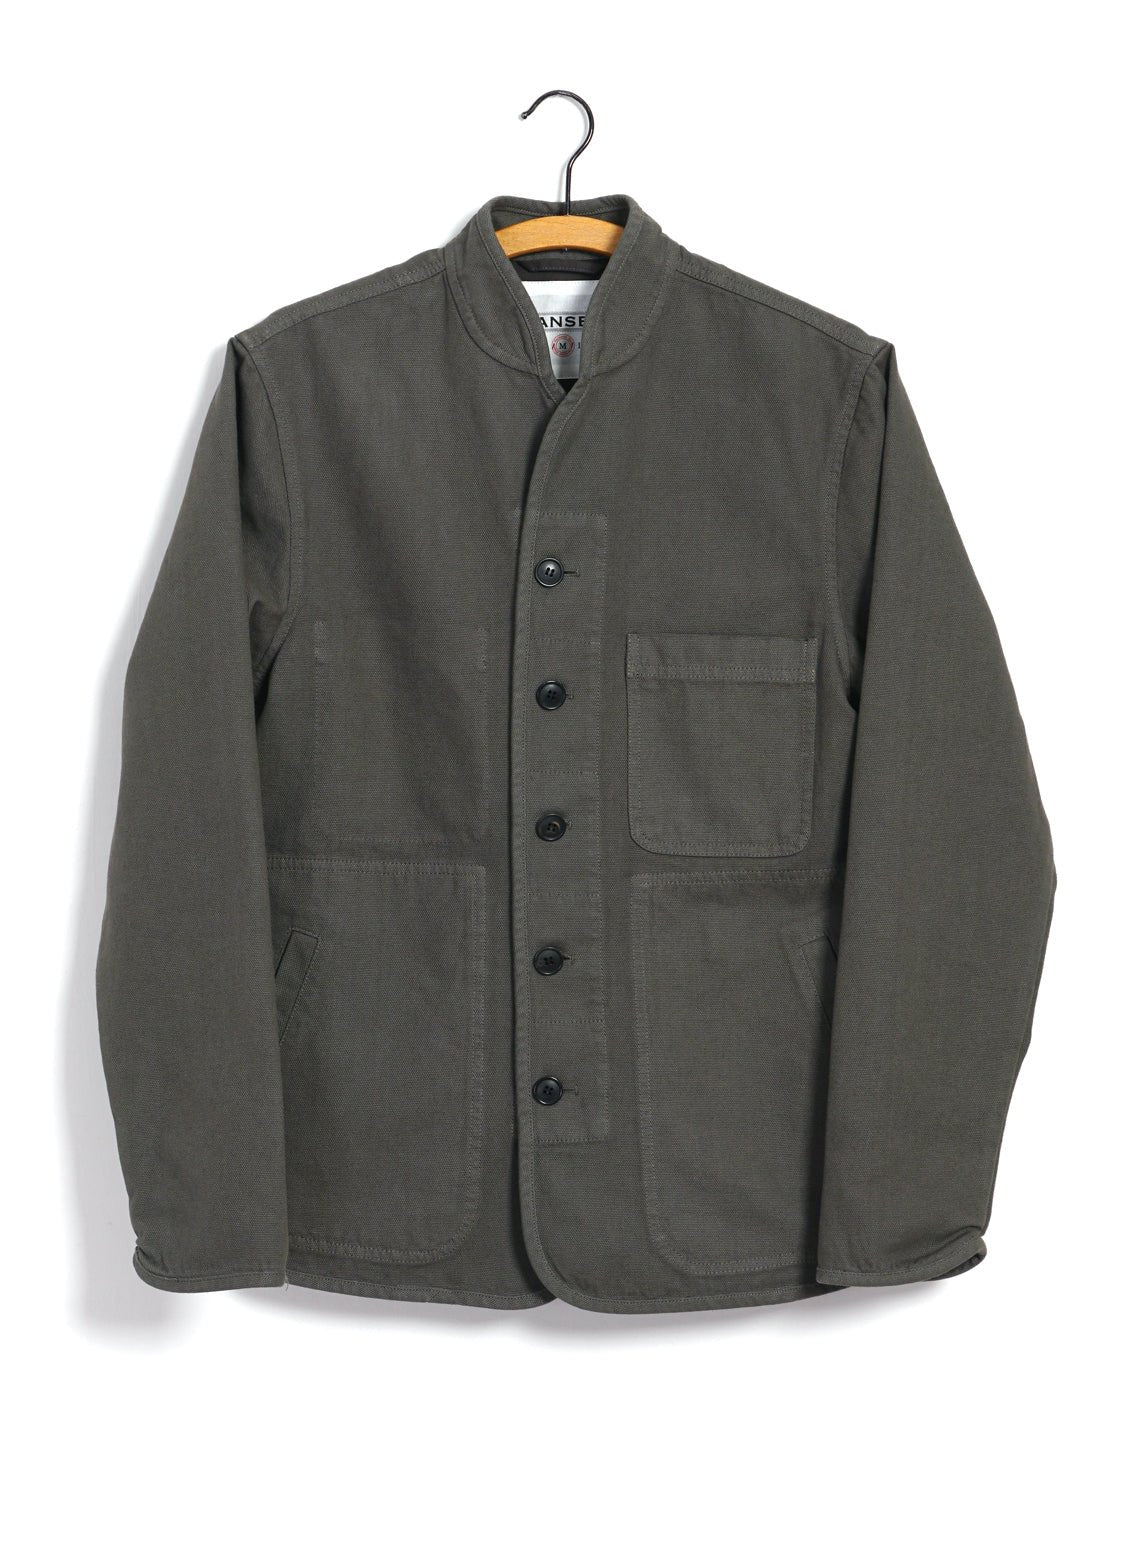 HANSEN GARMENTS - ERLING | Refined Work Jacket | Green Grey - HANSEN Garments